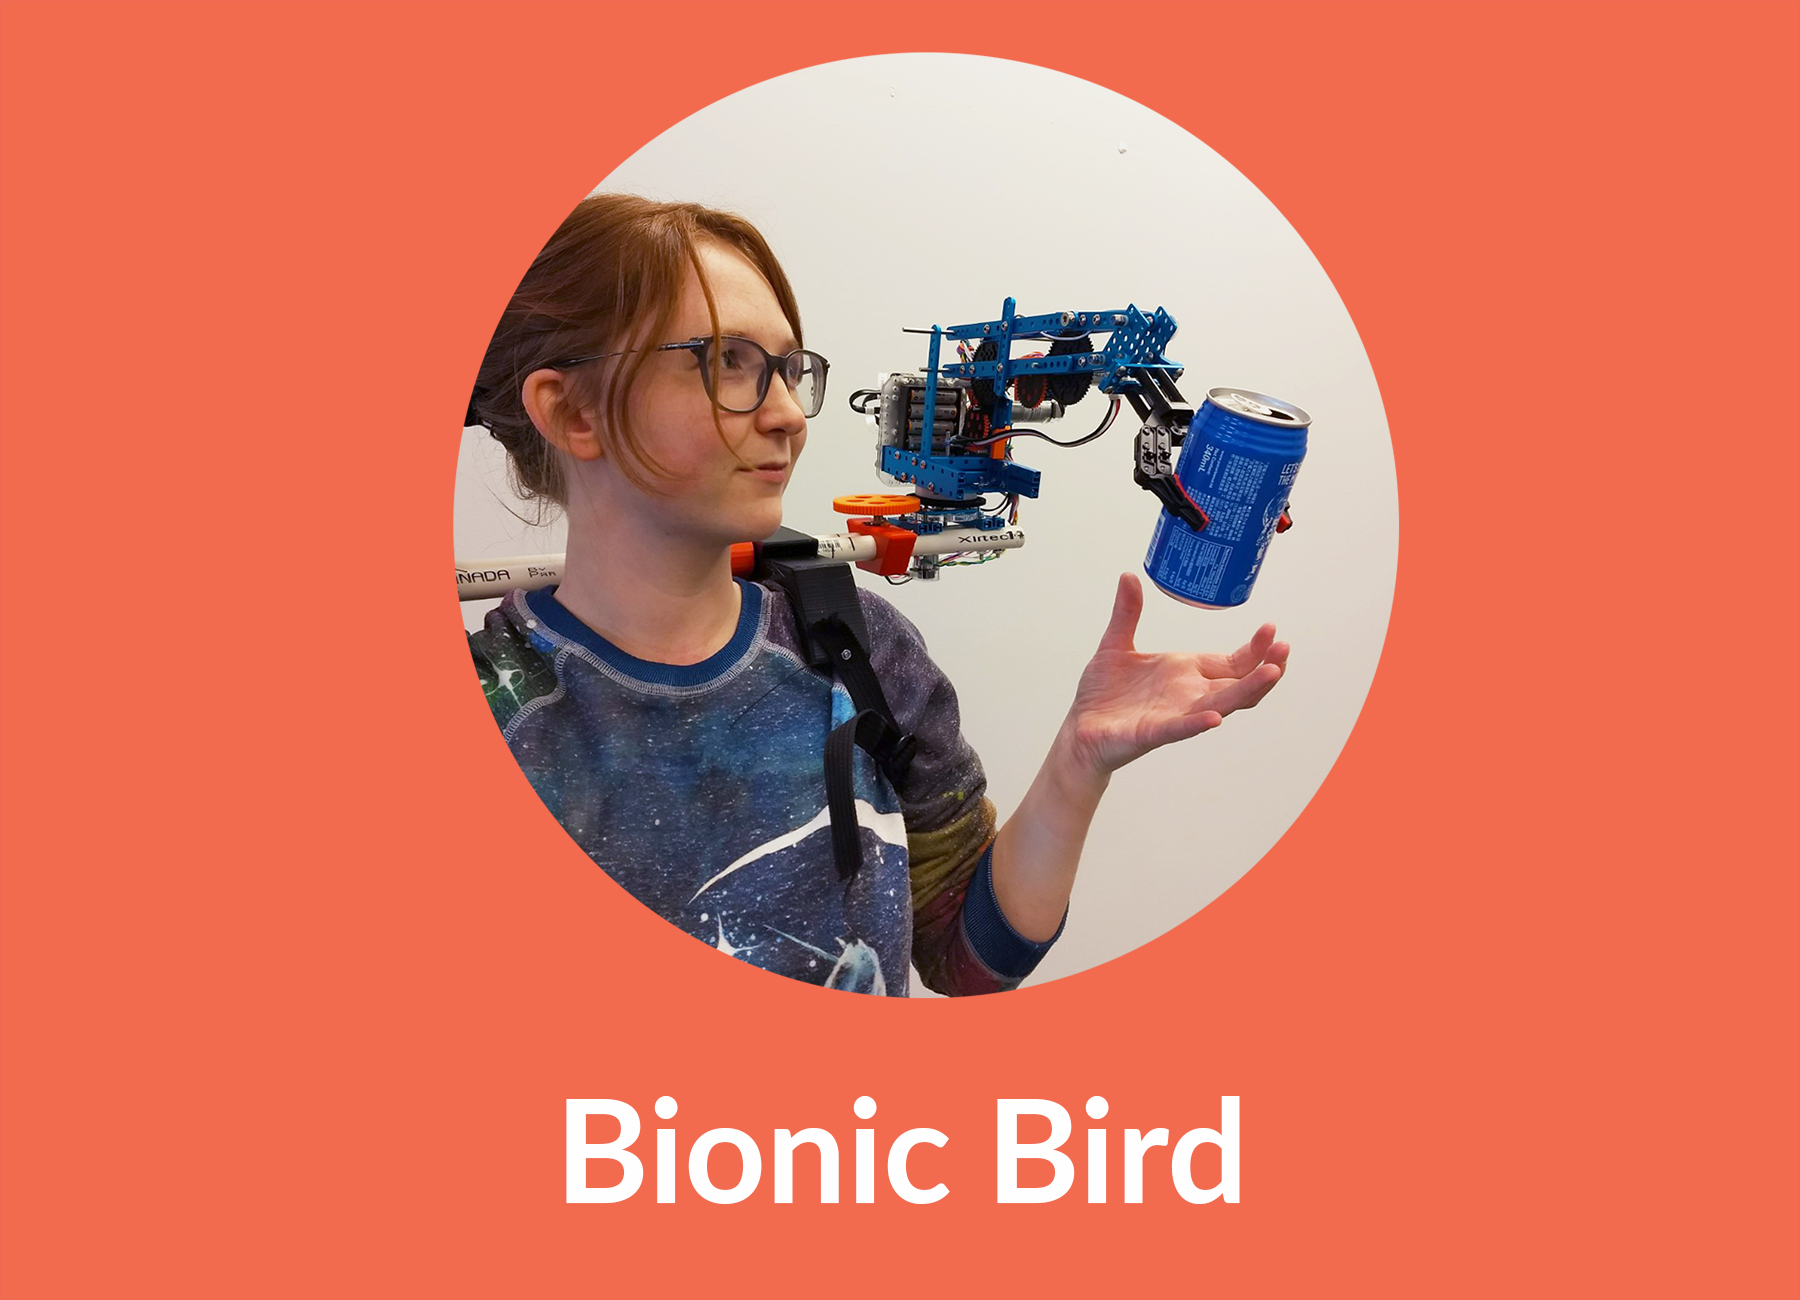 Robot Bird on Shoulder